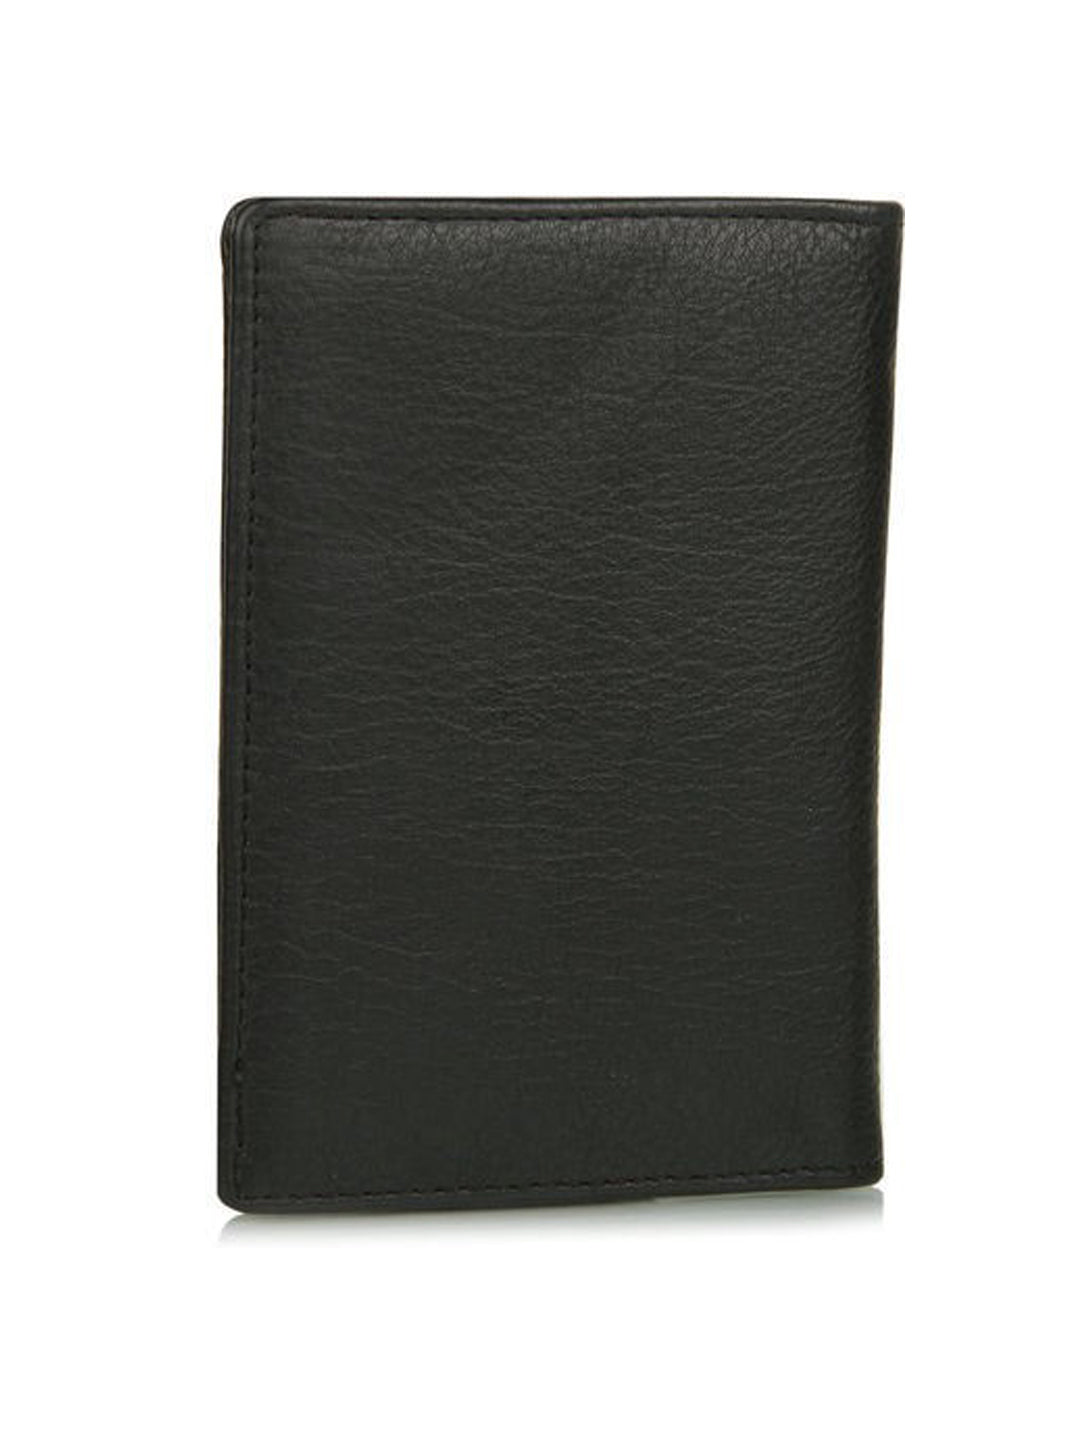 genuine leather black passport cover